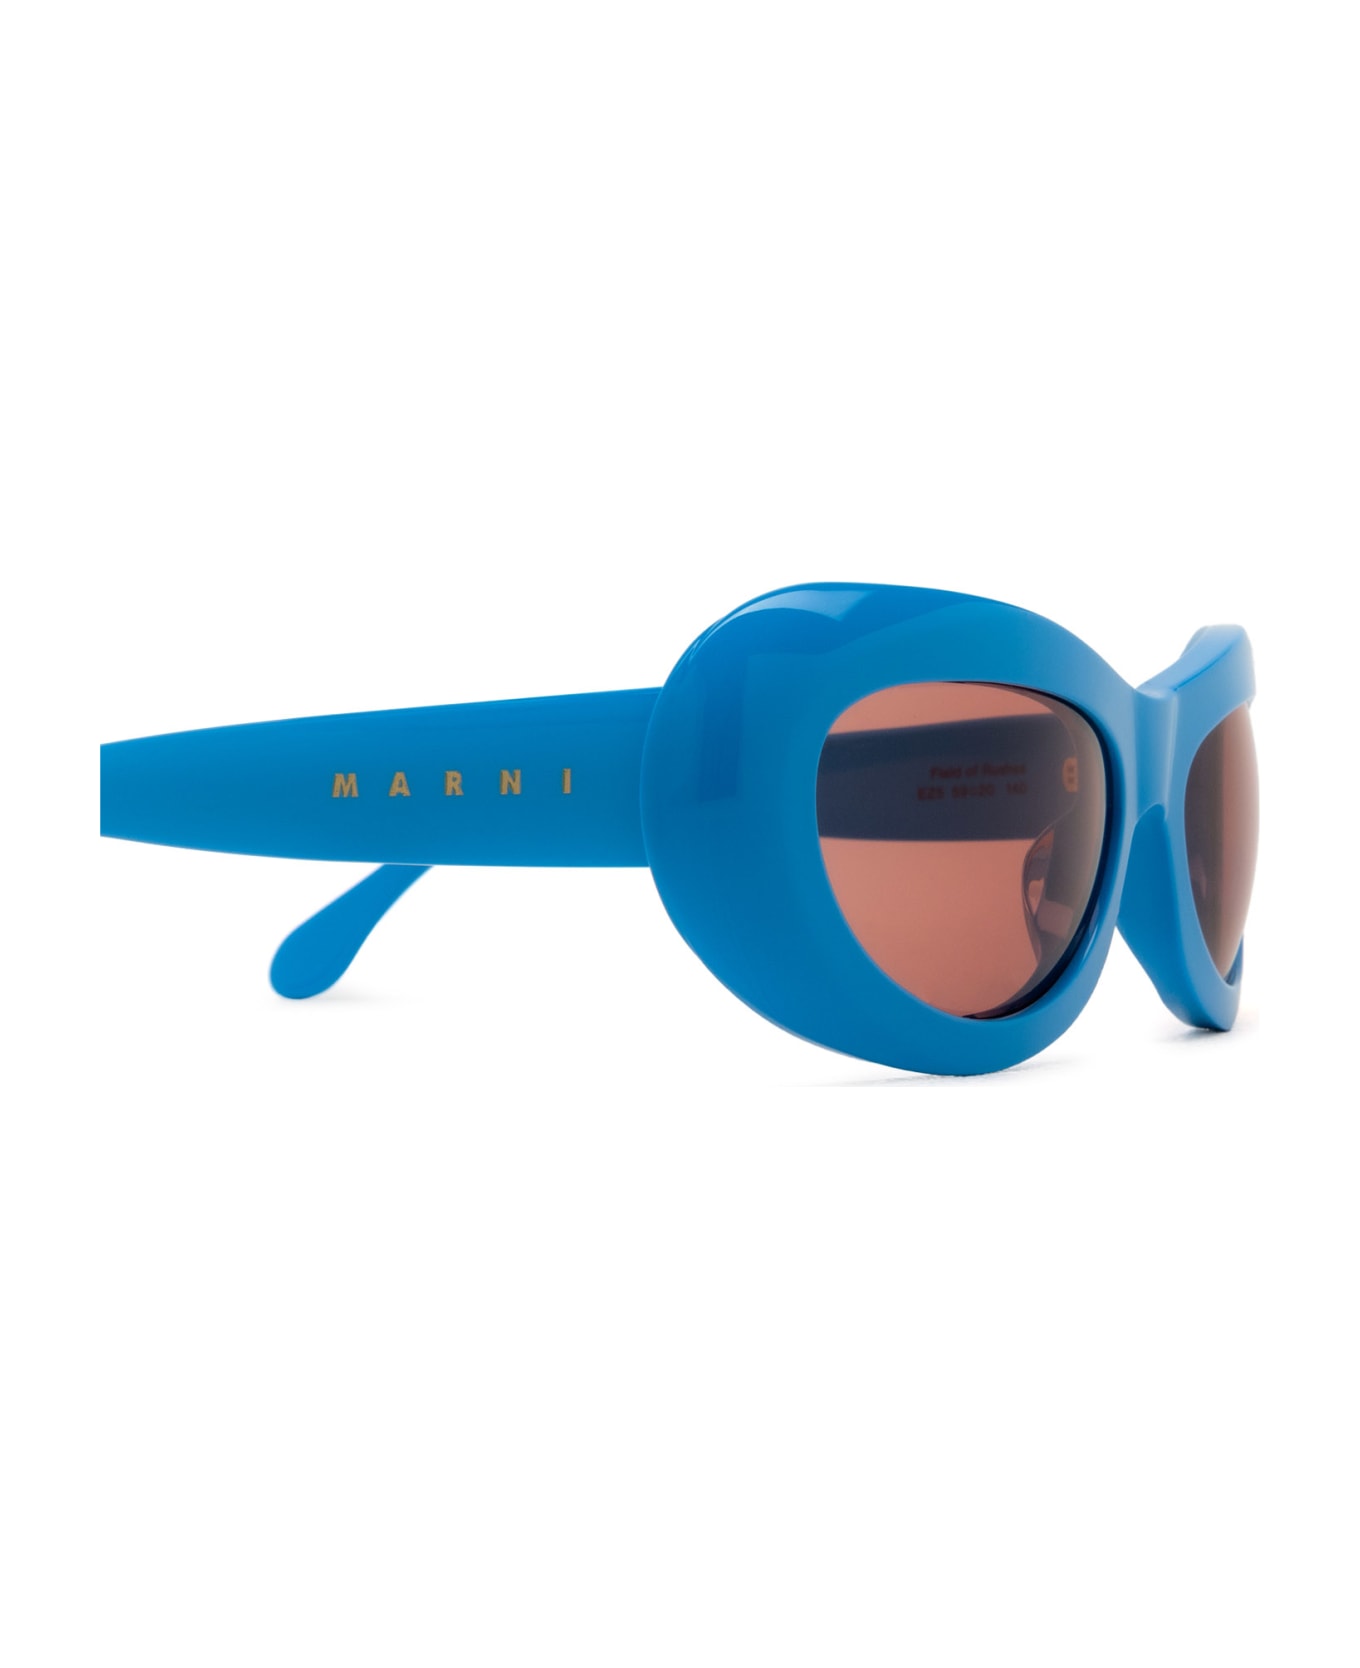 Marni Eyewear Field Of Rushes Blue Sunglasses - Blue